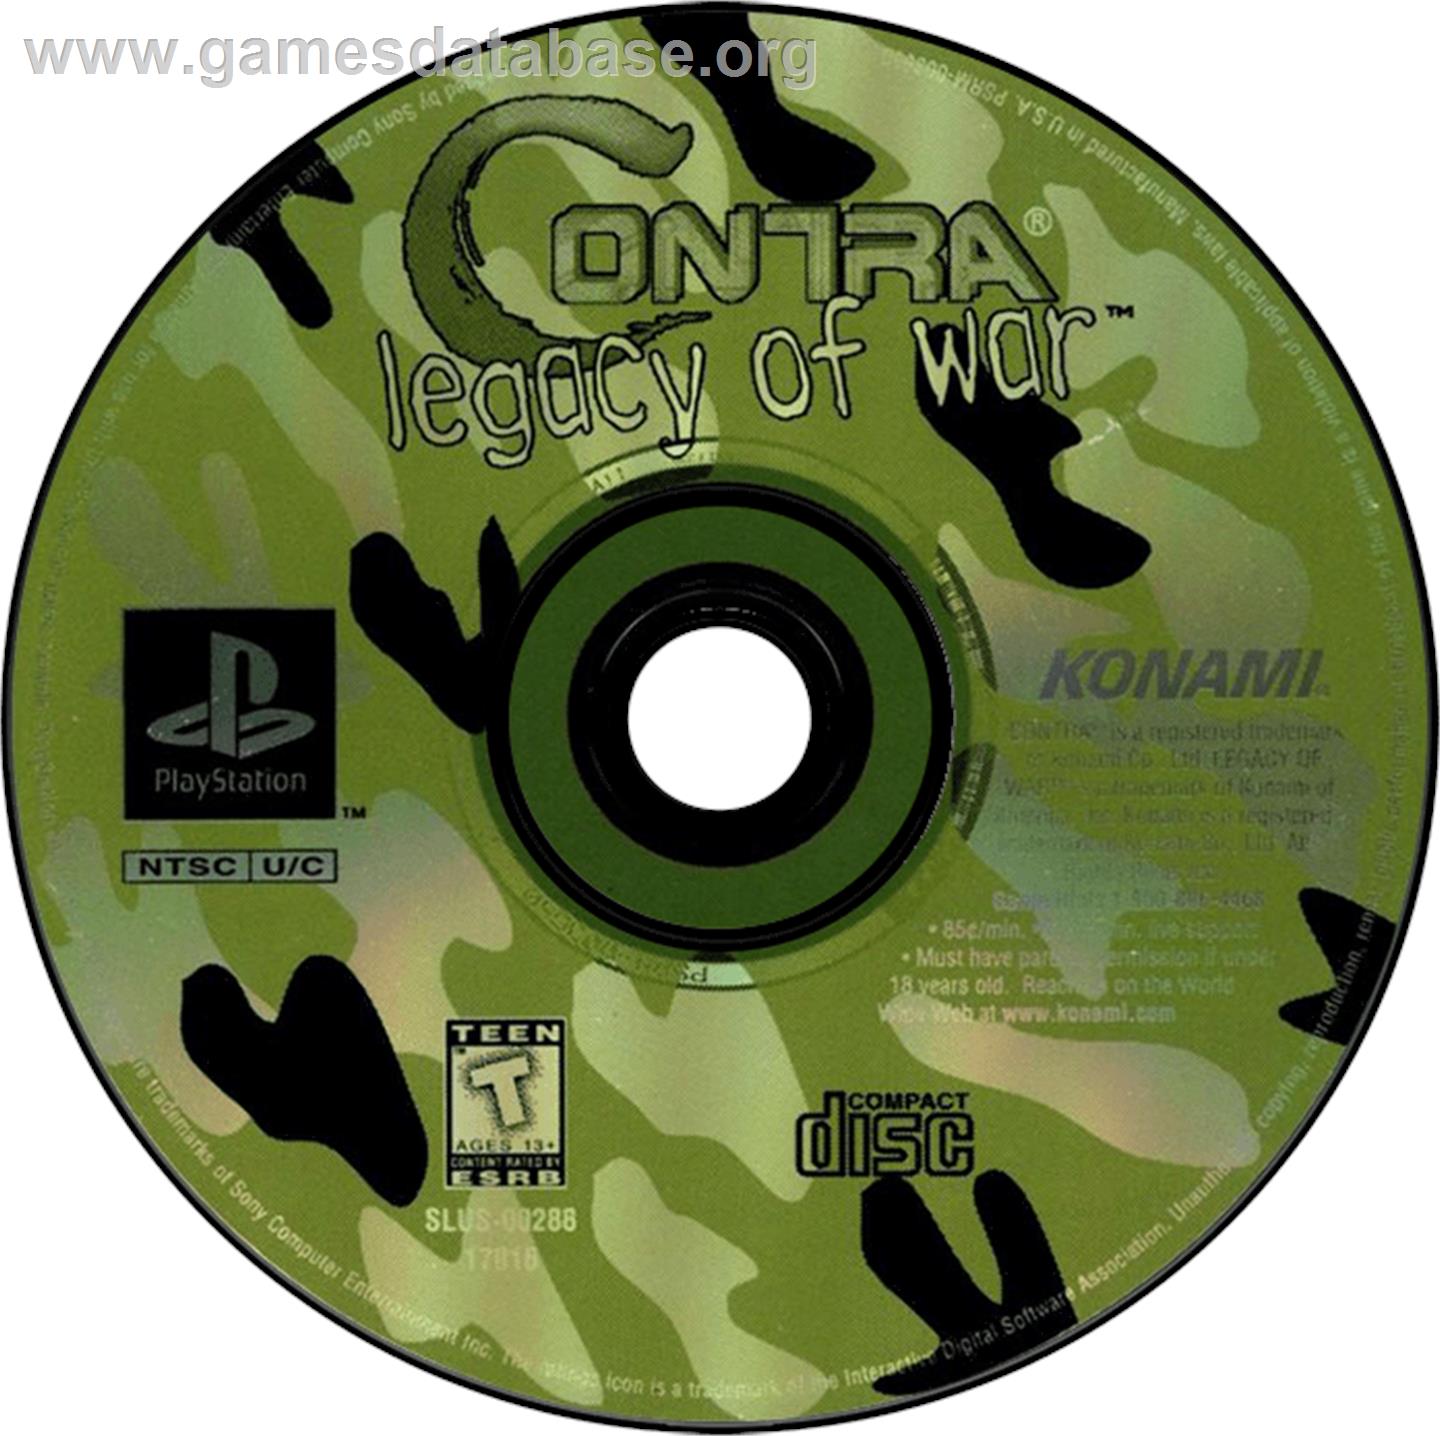 Contra: Legacy of War - Sony Playstation - Artwork - Disc